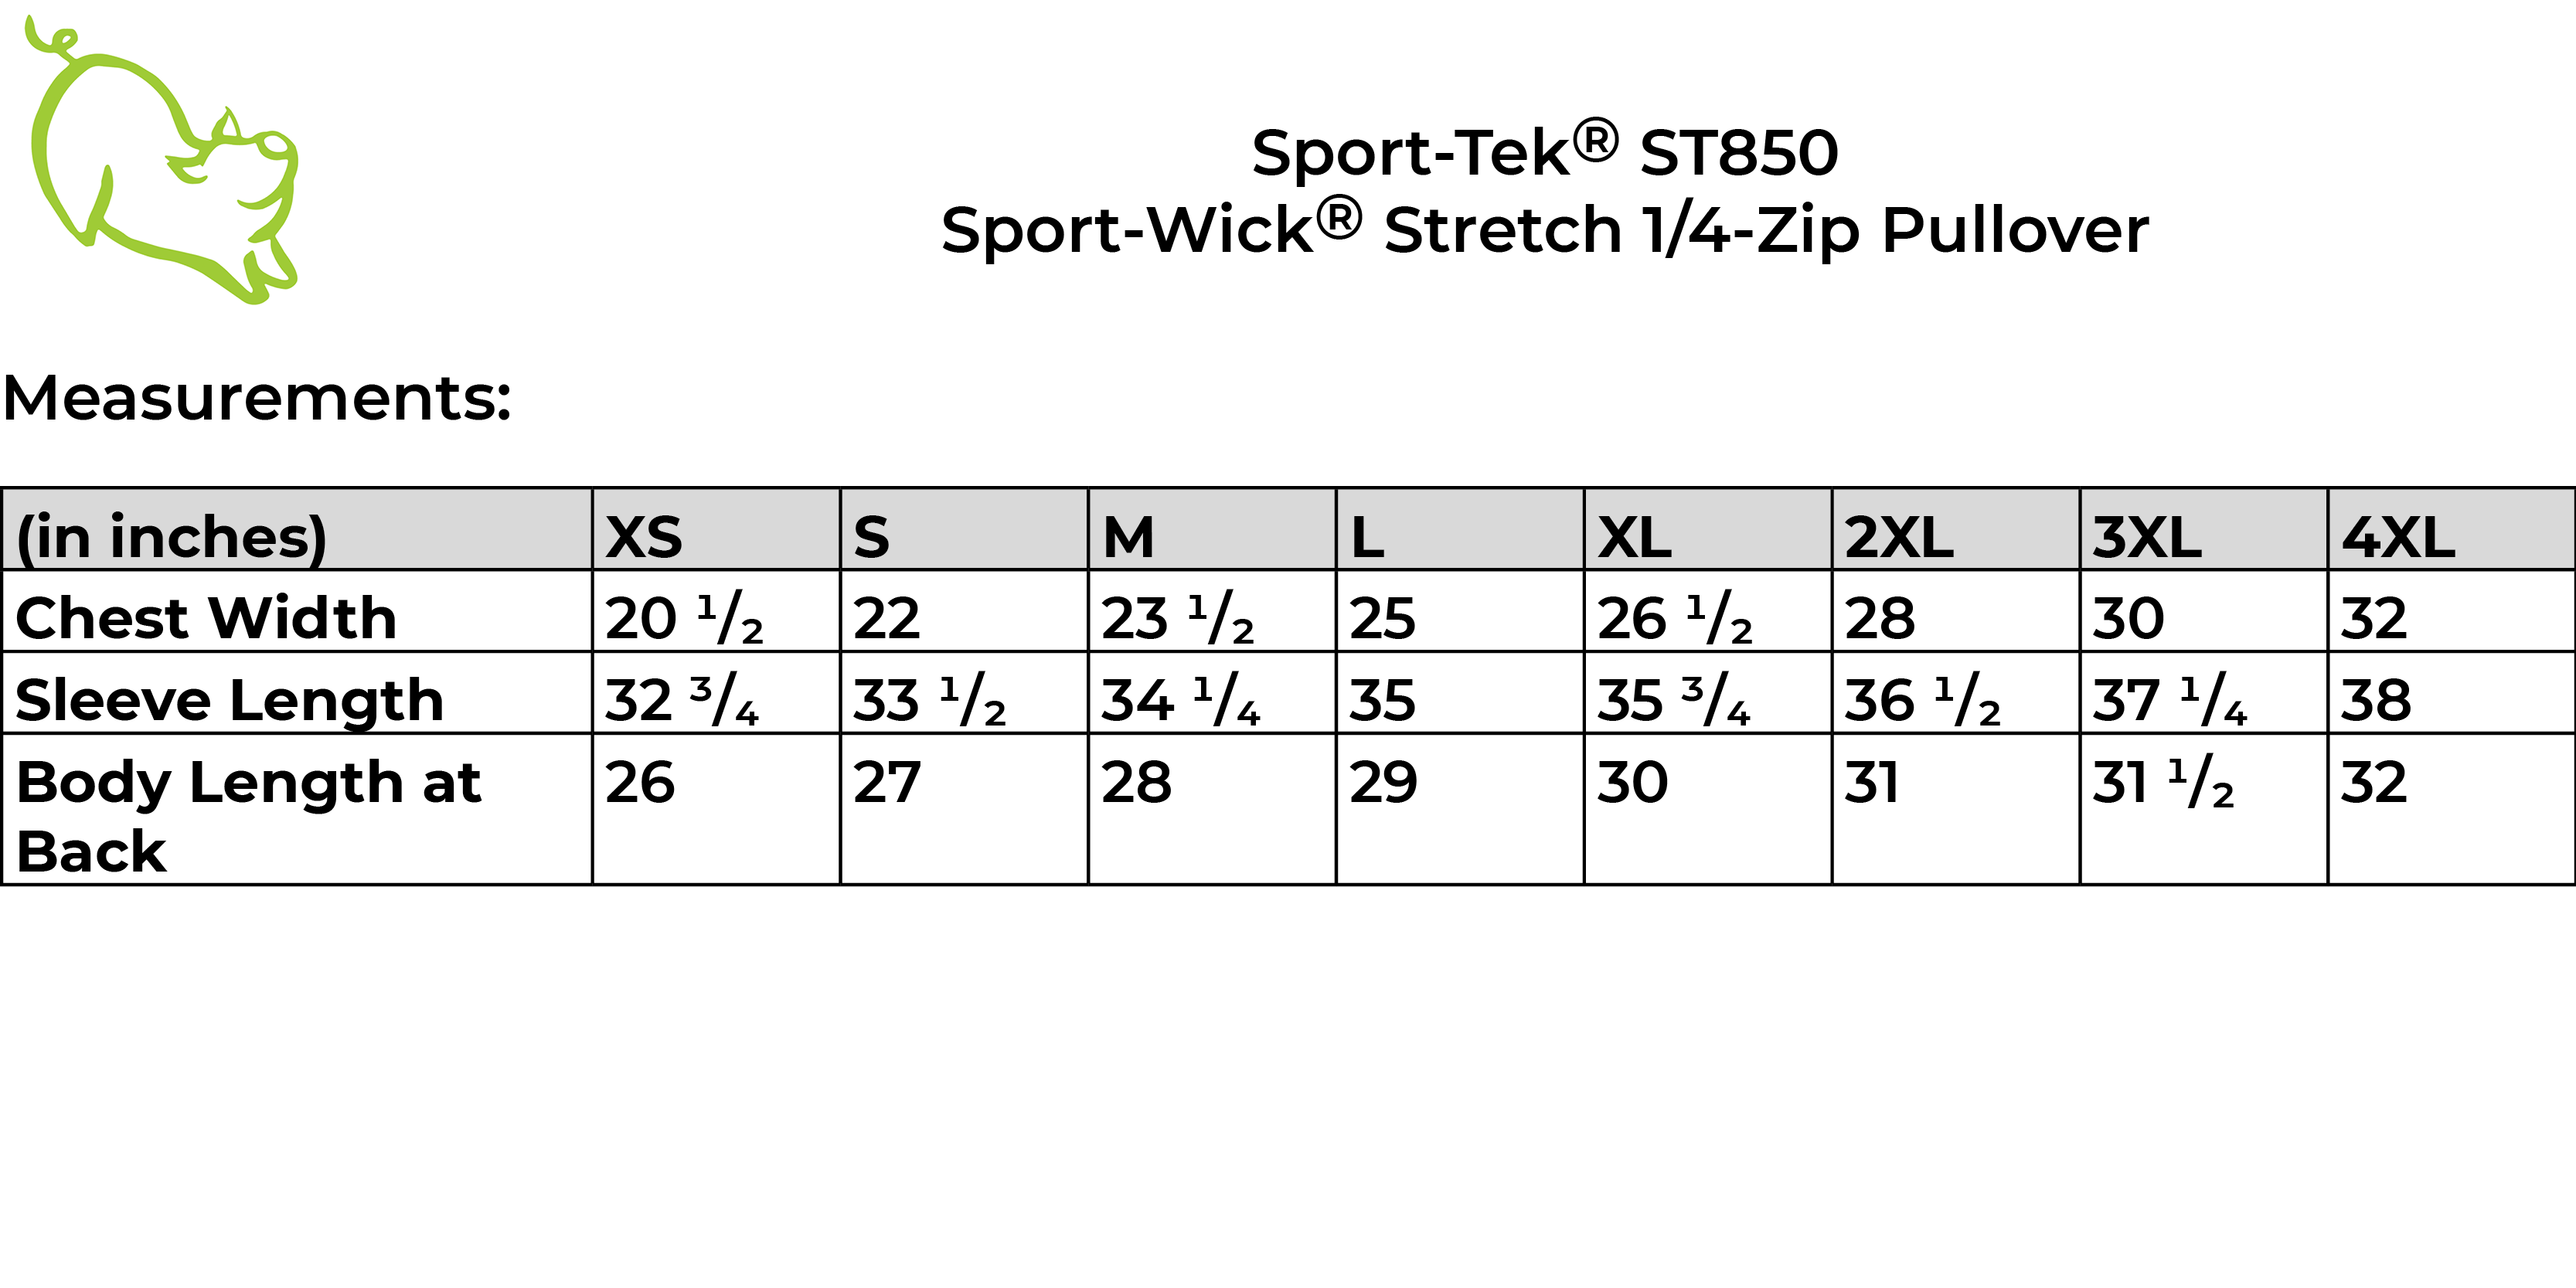 Sport-Tek ST850 size guide